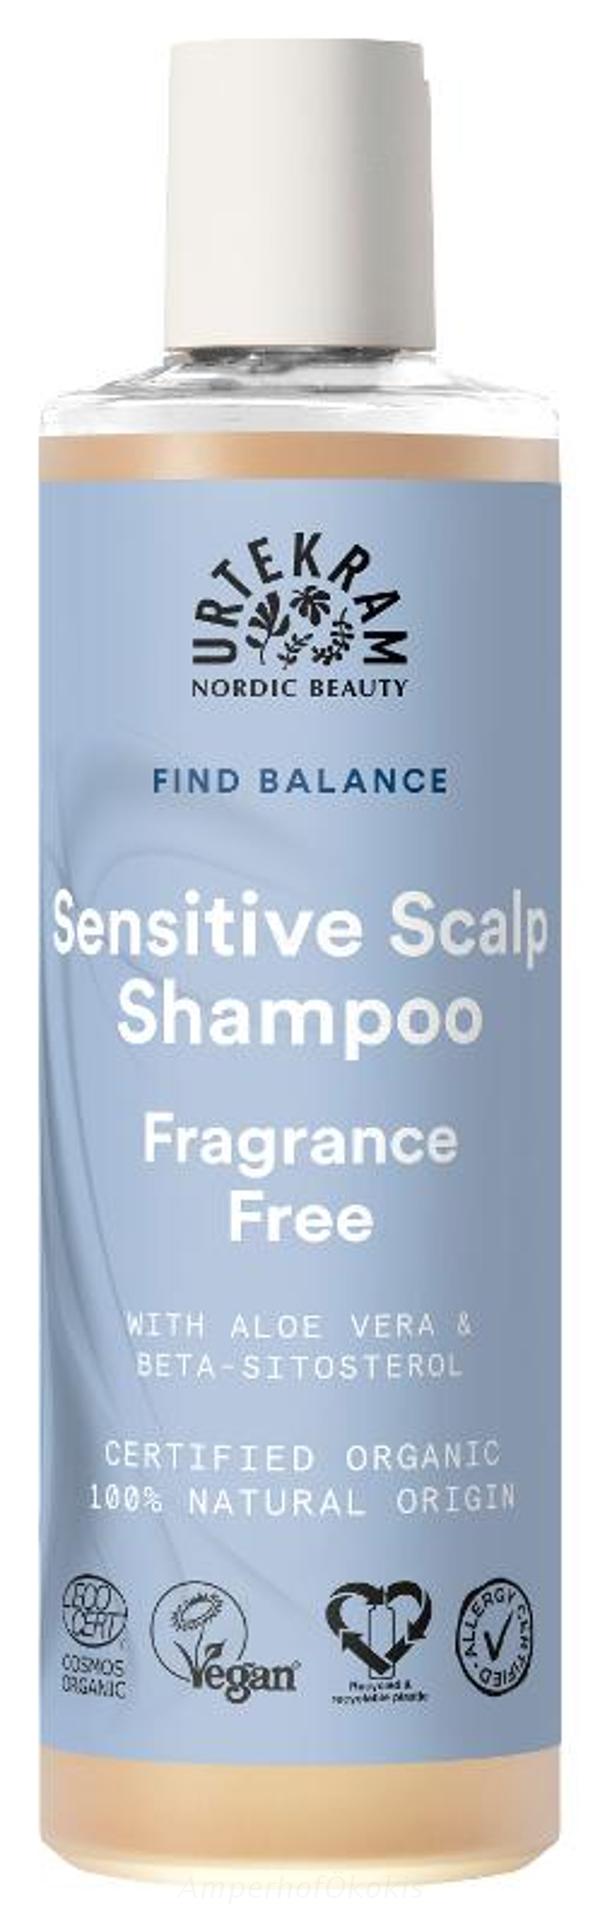 Produktfoto zu Shampoo ohne Duft 250 ml